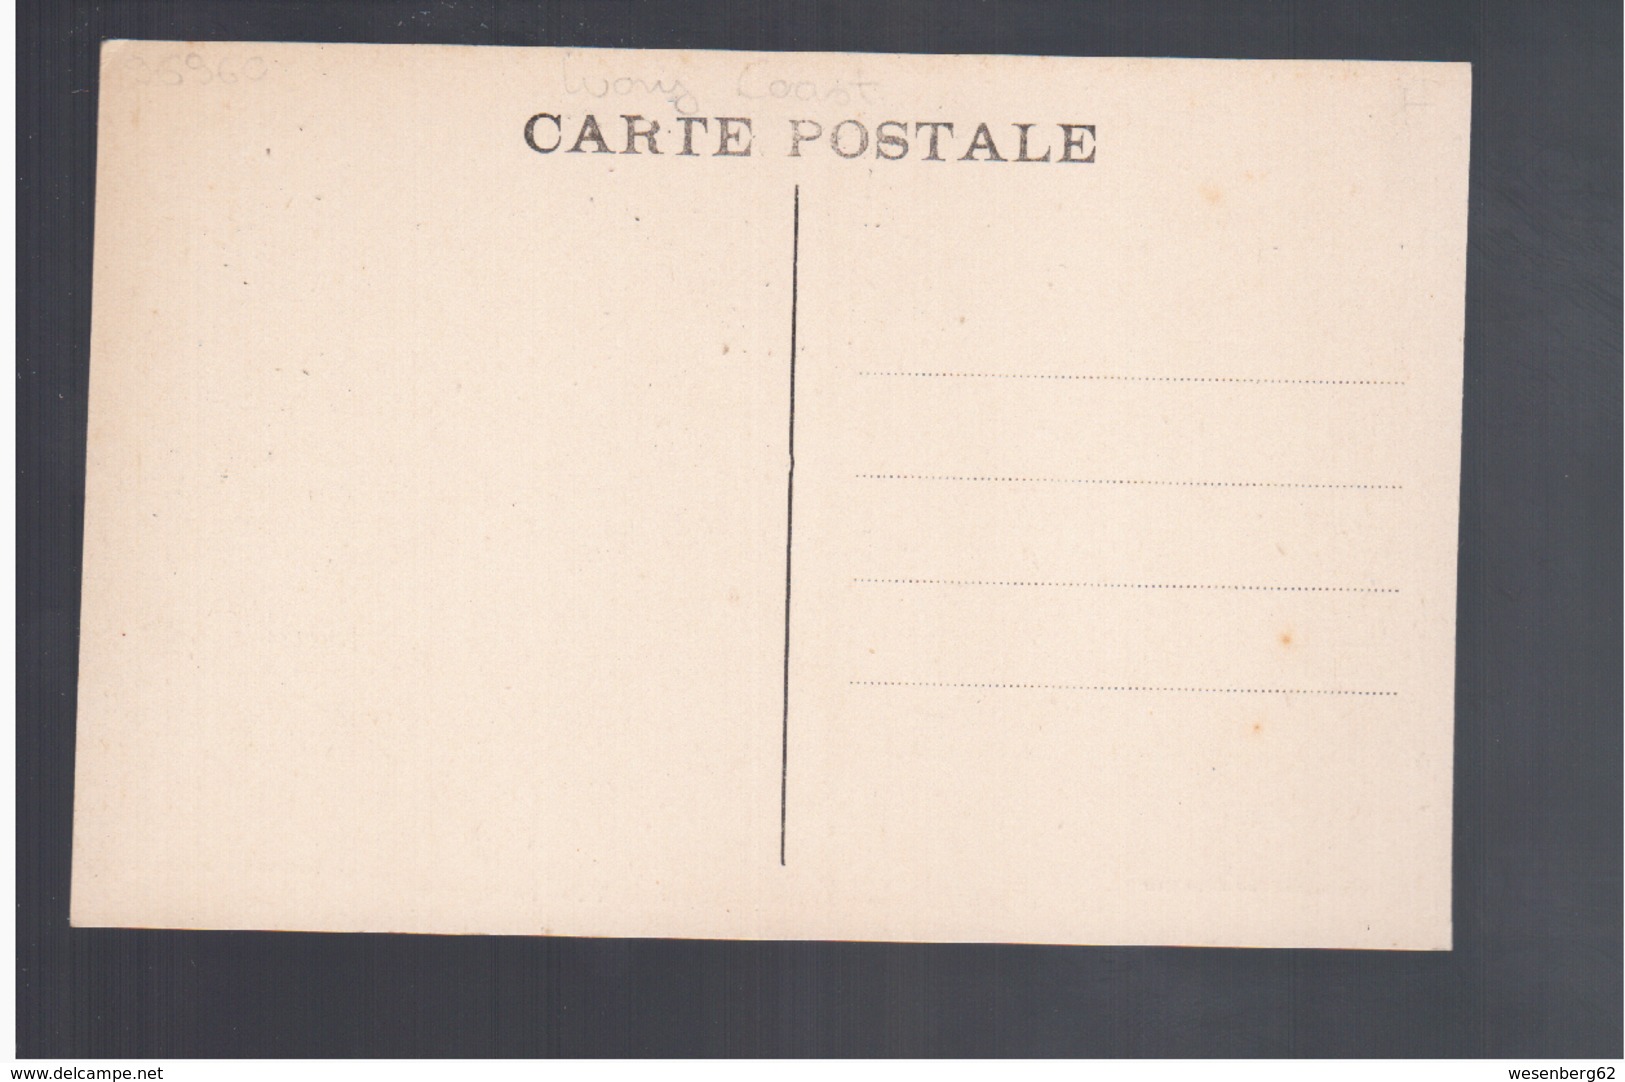 Cote D'Ivoire Dabakala - Fête Indigène Ca  1915 Old Postcard - Côte-d'Ivoire